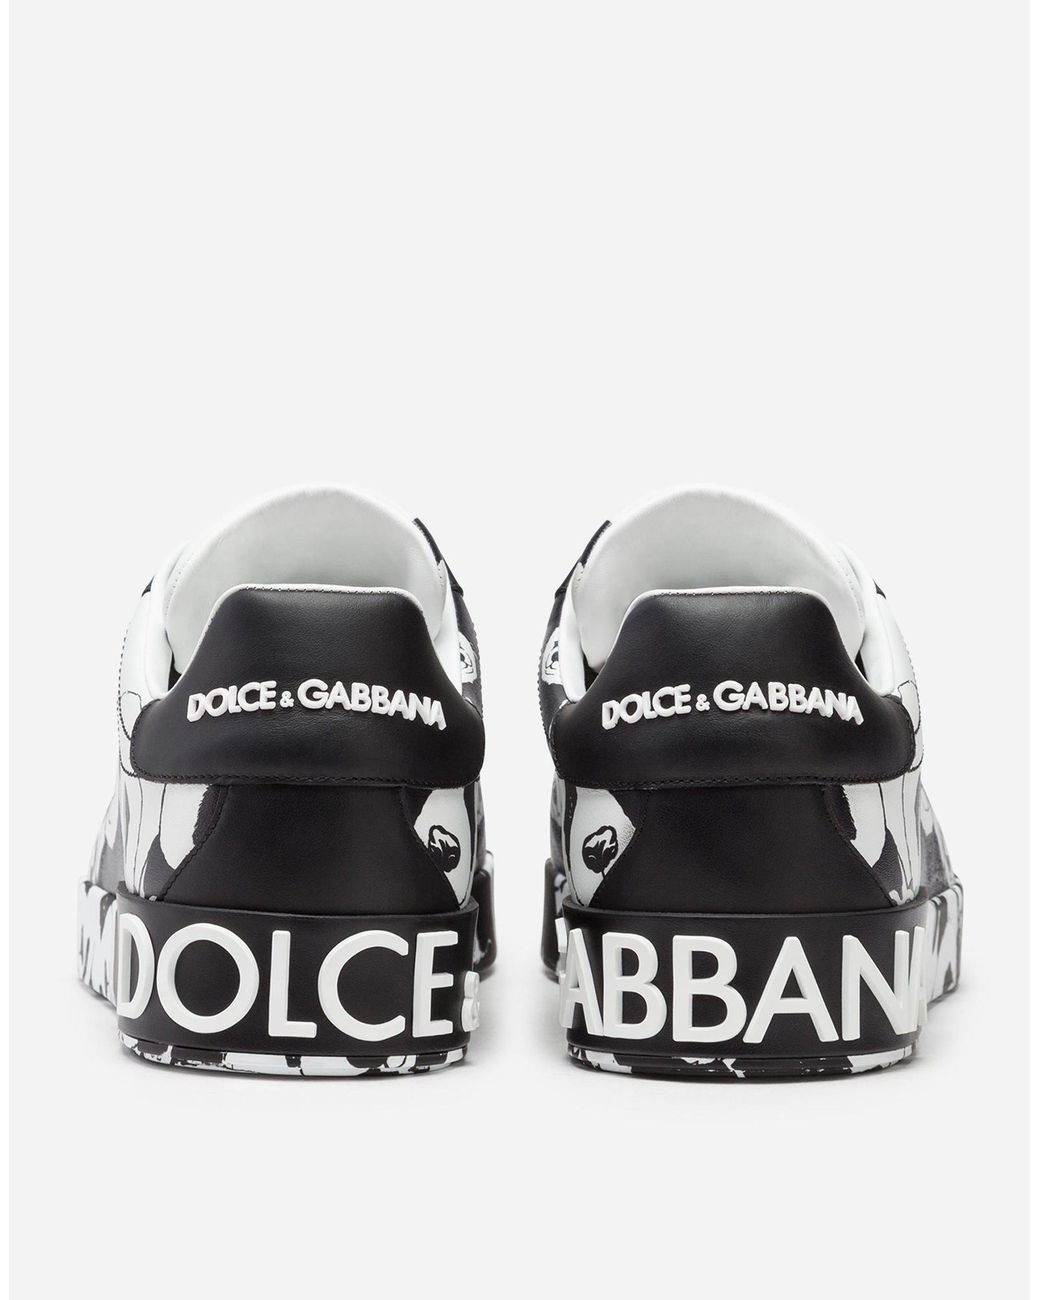 Dolce & Gabbana Portofino Sneakers In Printed Nappa Calfskin for Men | Lyst